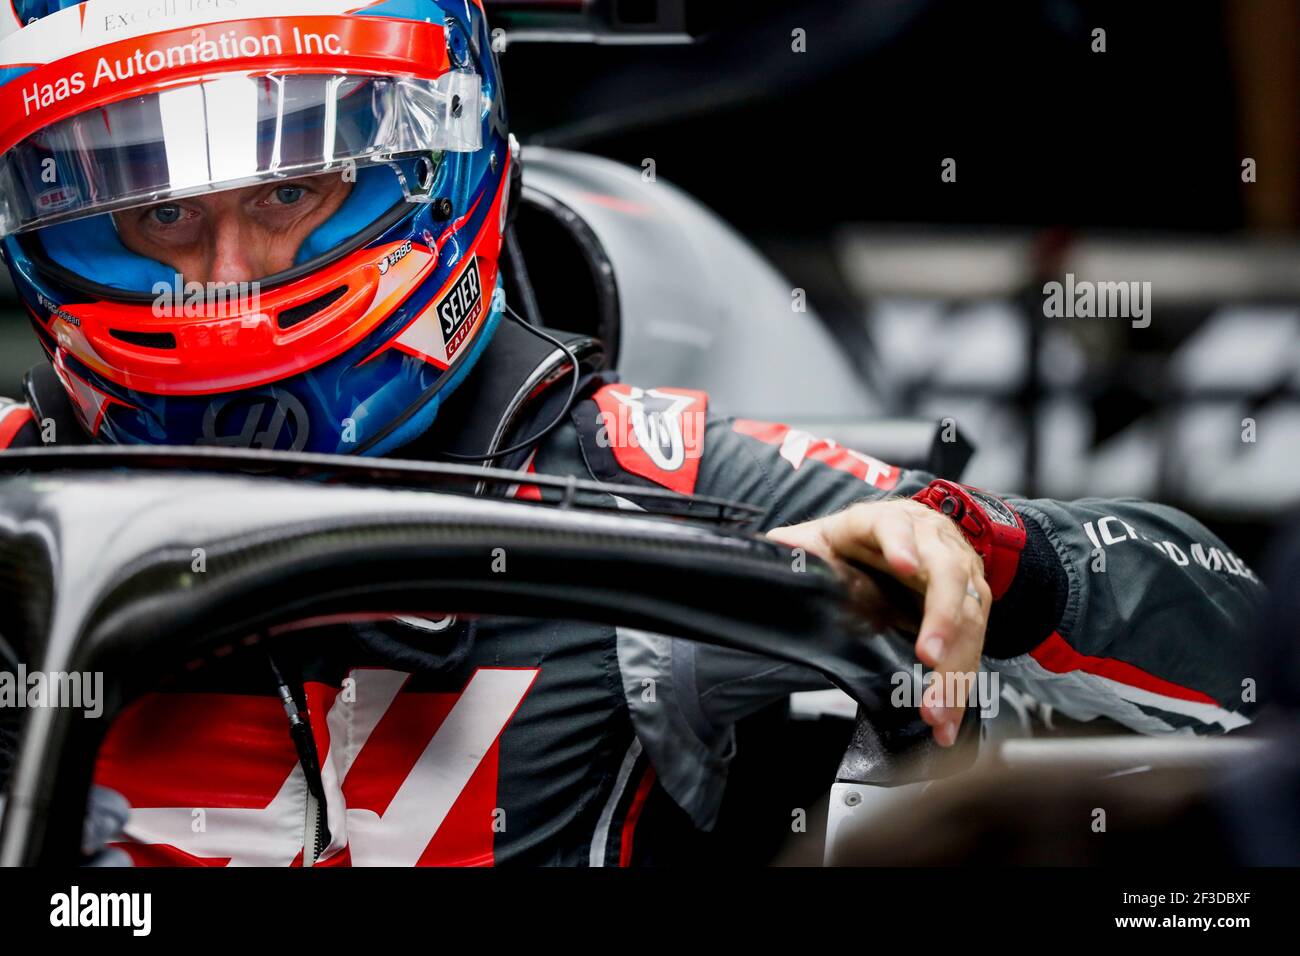 GROSJEAN Romain (fra), Haas F1 Team VF-18 Ferrari, Richard Mille watch during the 2018 Formula